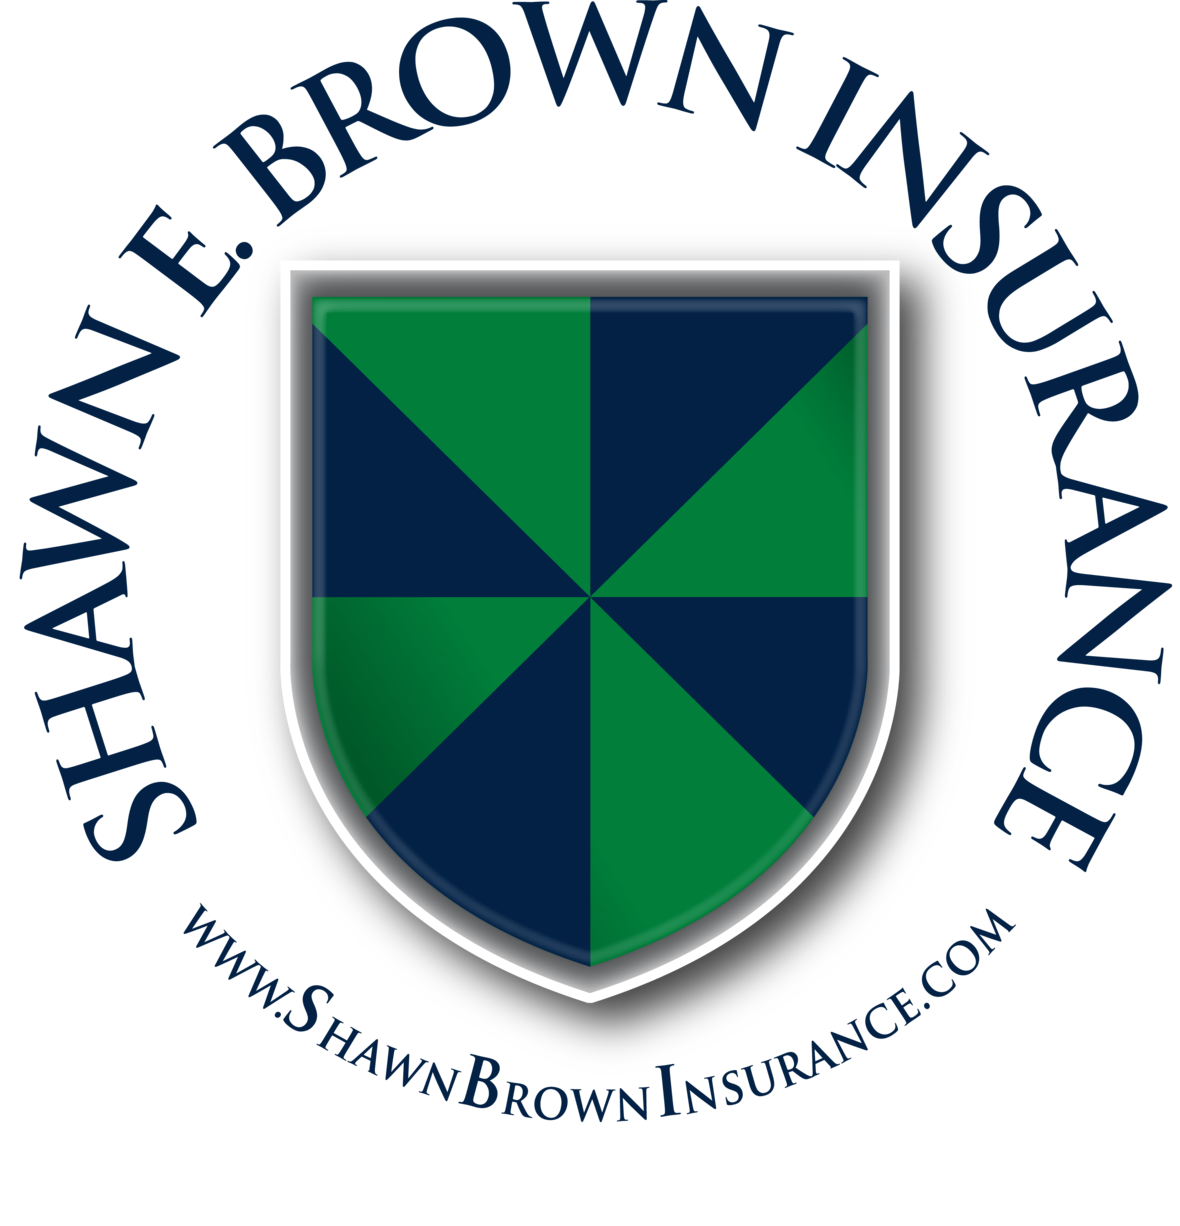 shawn e. brown insurance logo